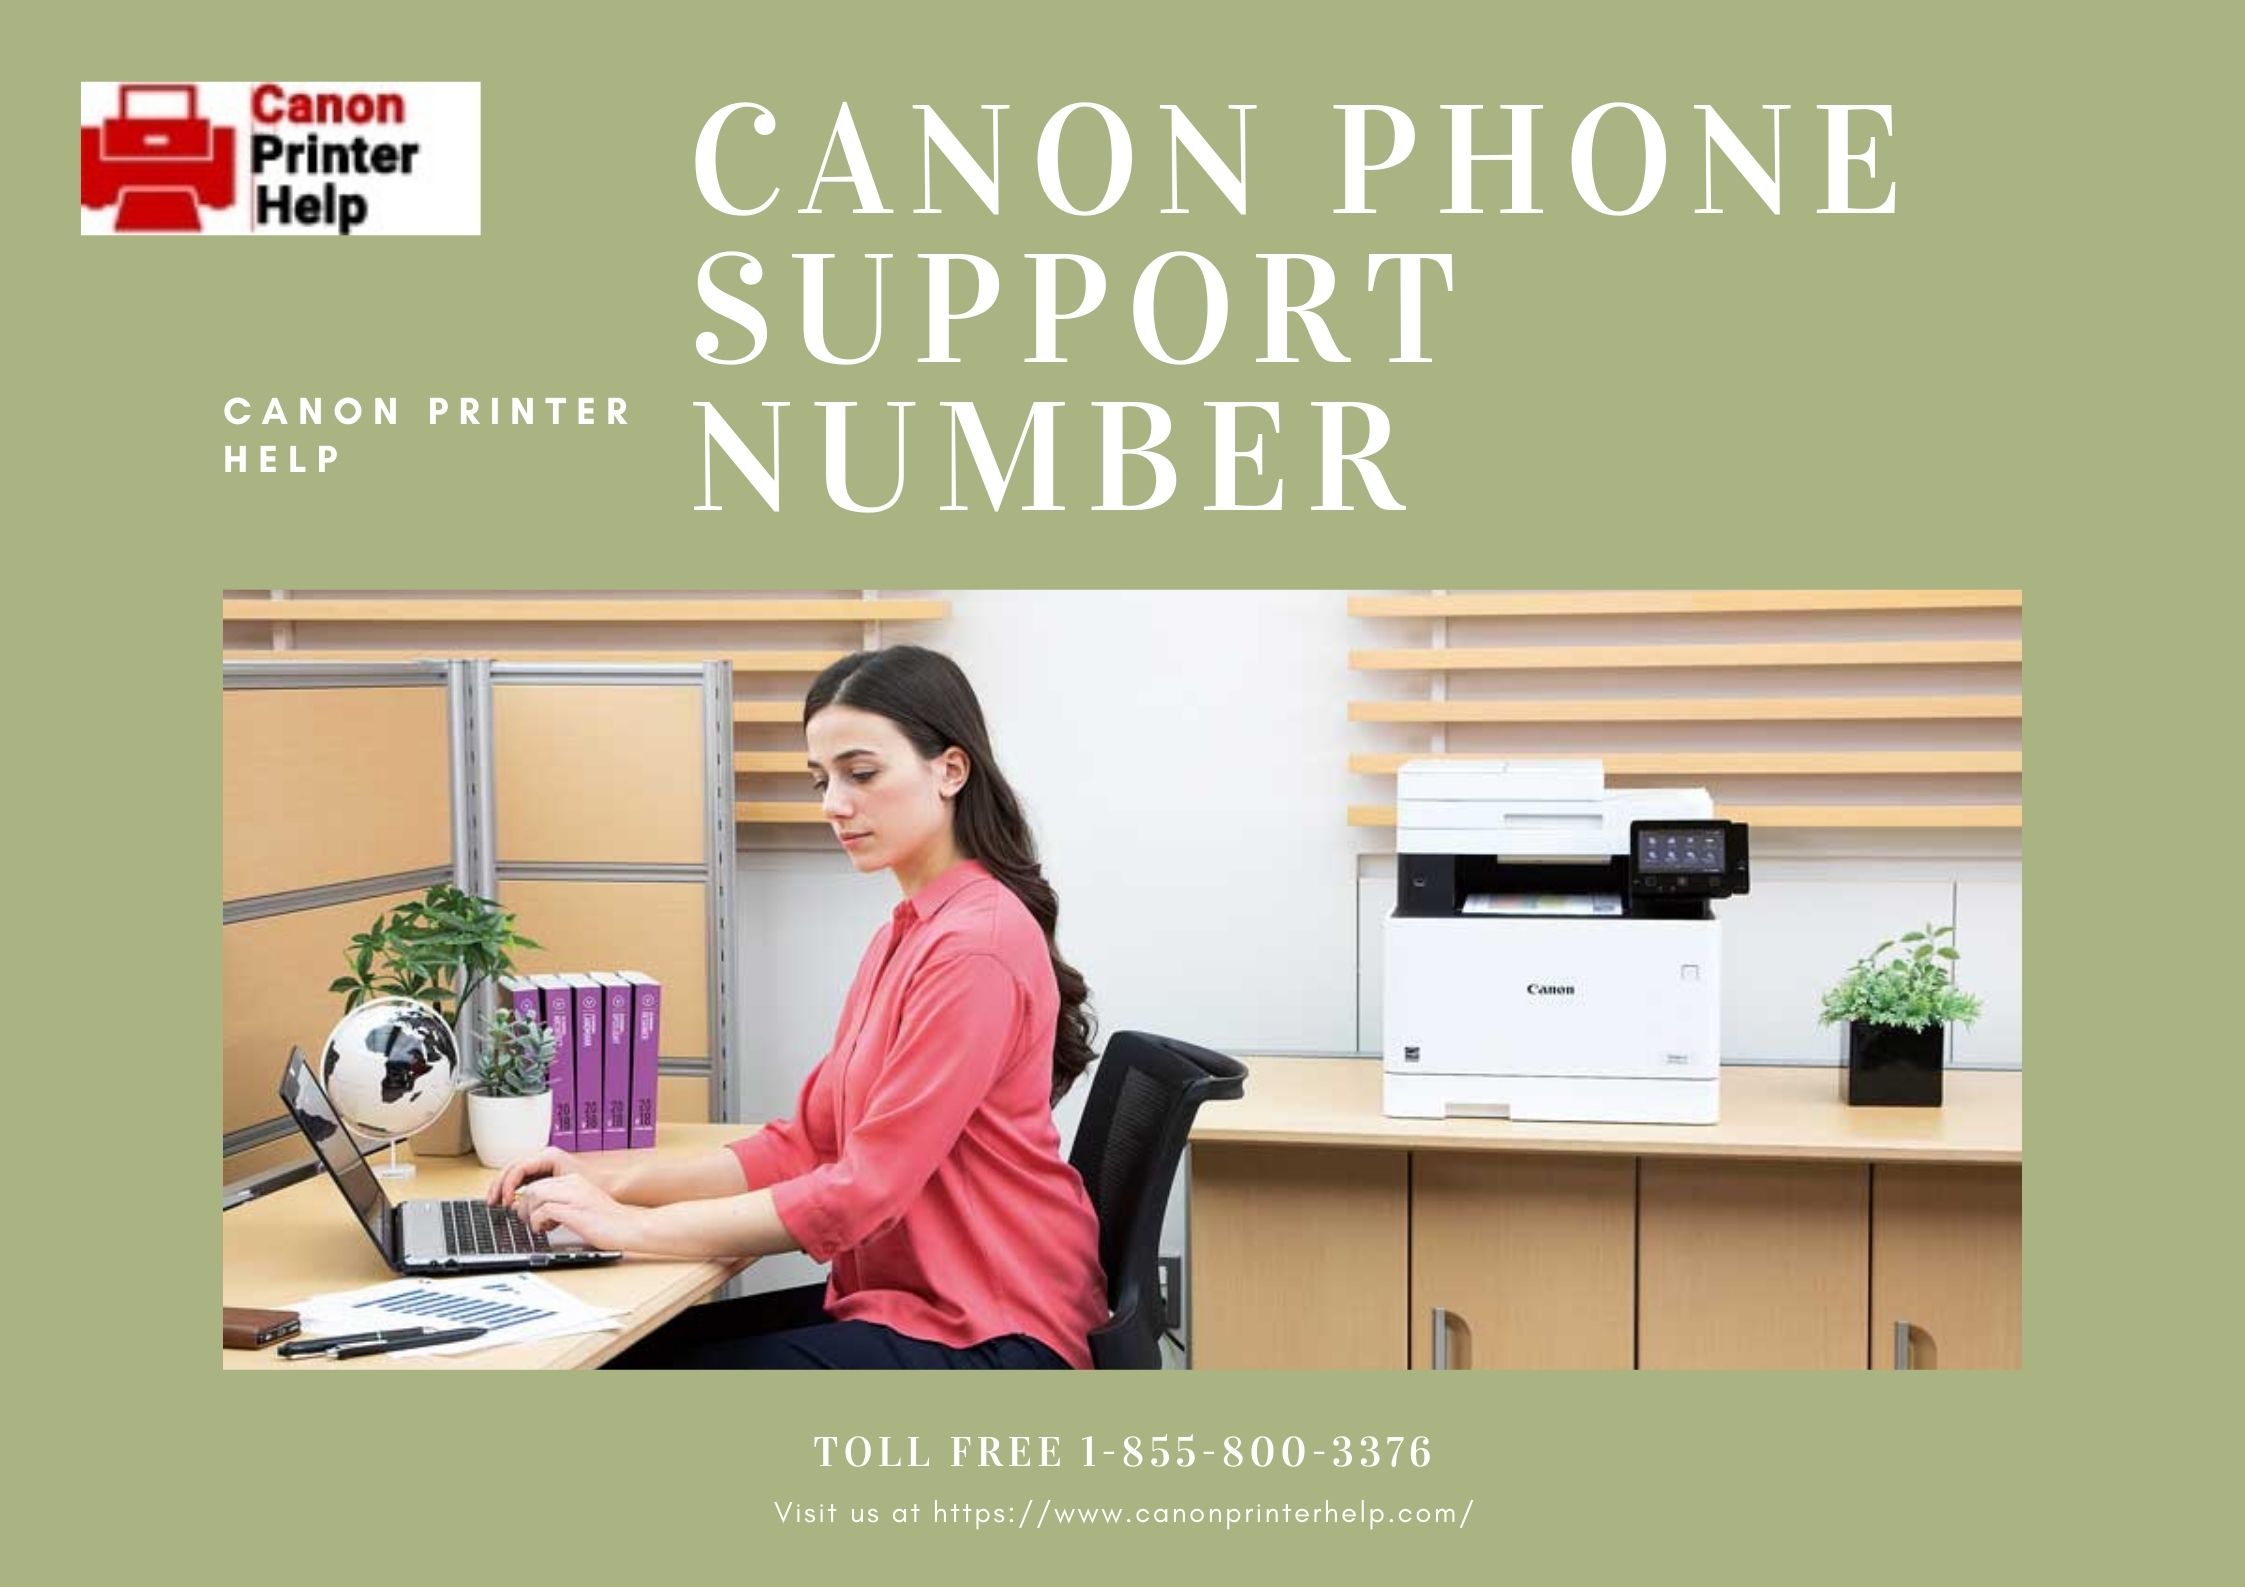 Canon Printer Help – 1-855-800-3376